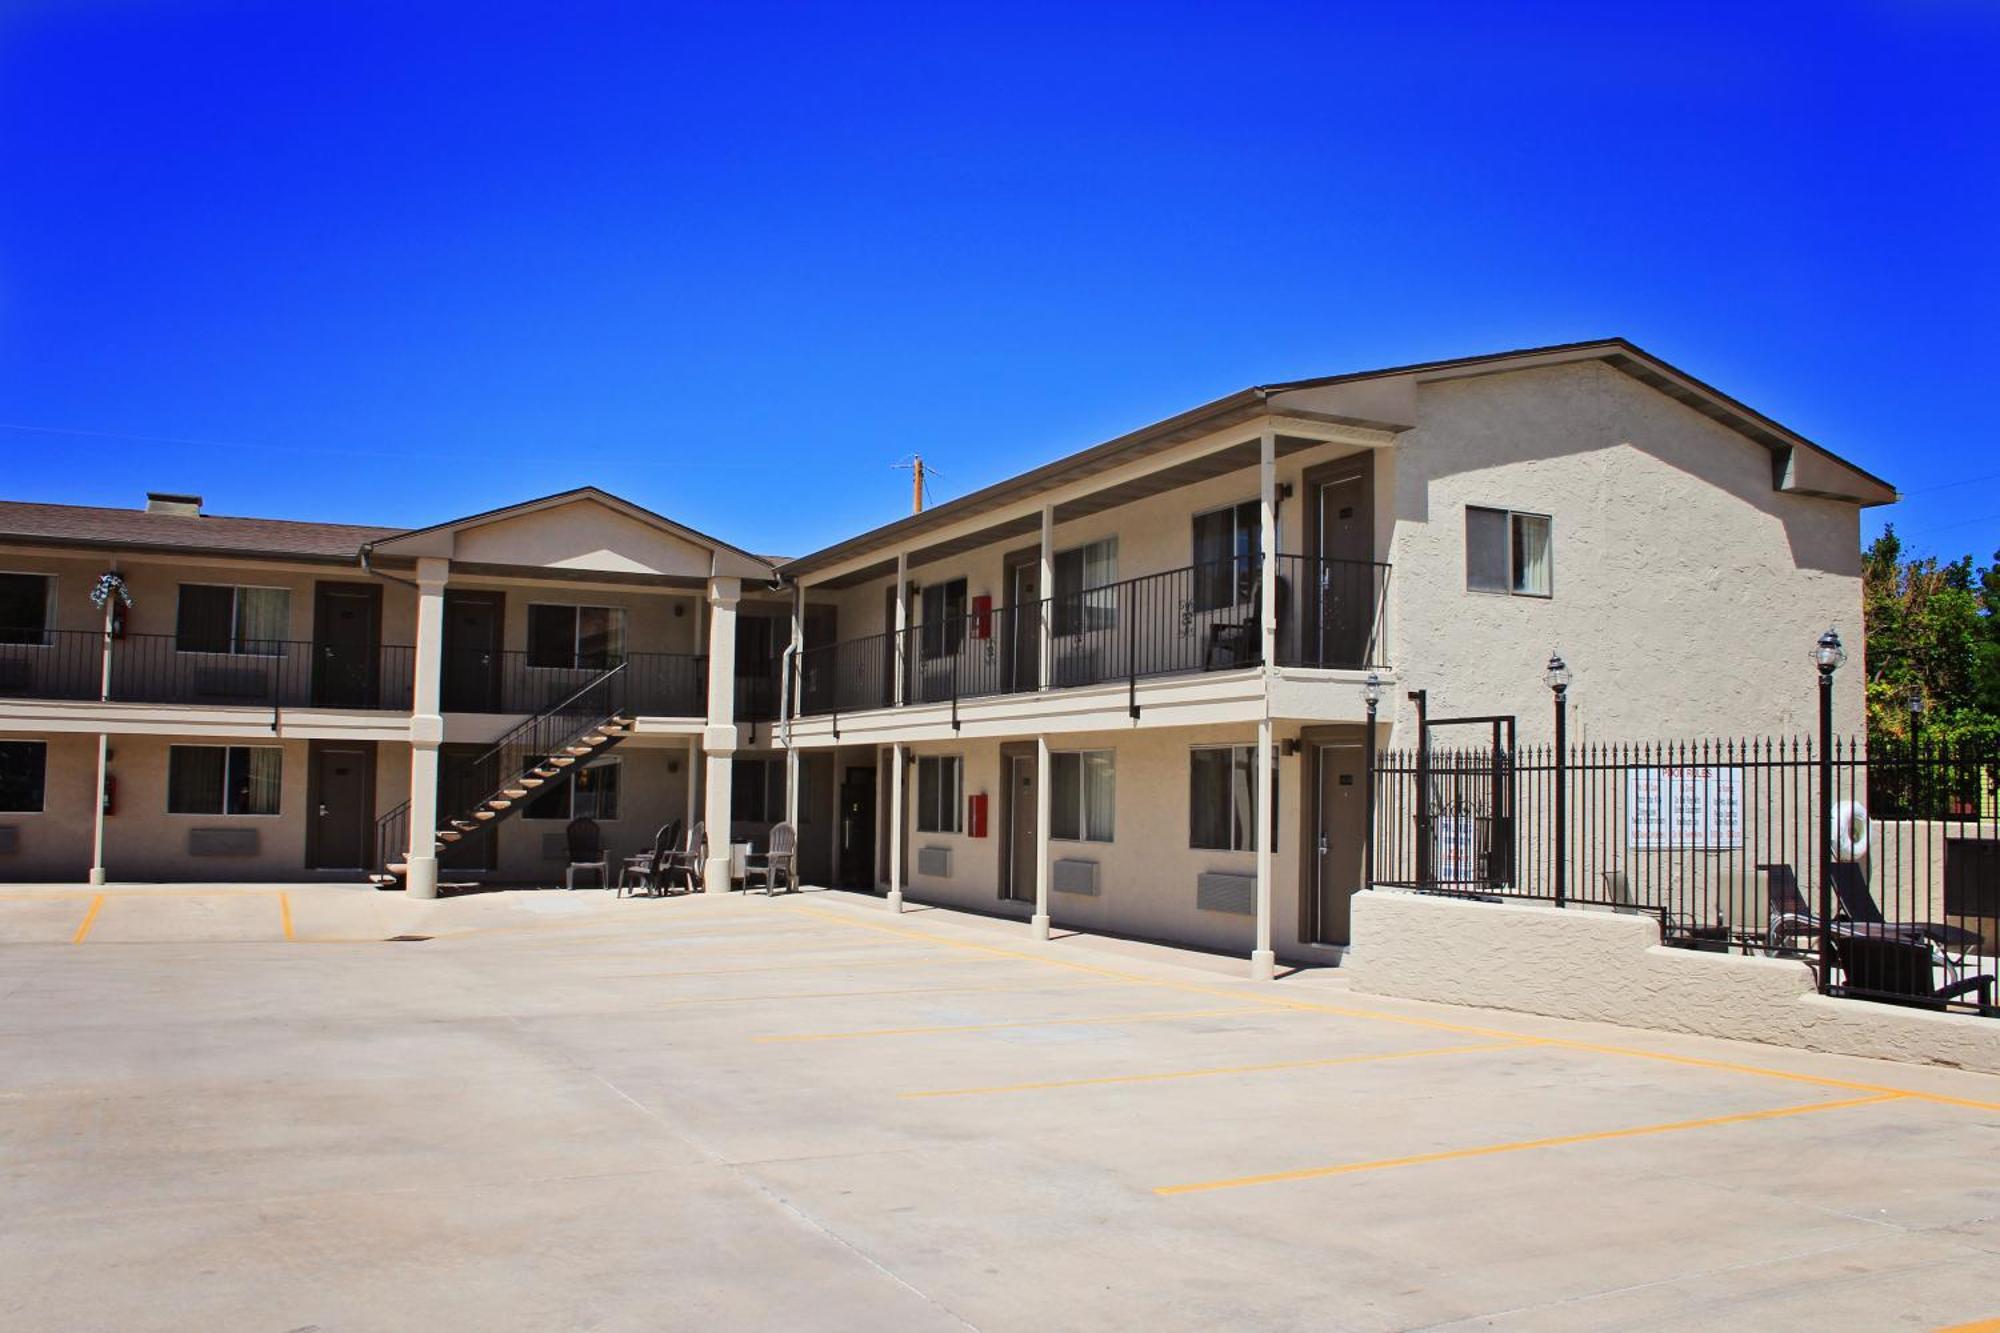 Bowen Motel Moab Exterior foto